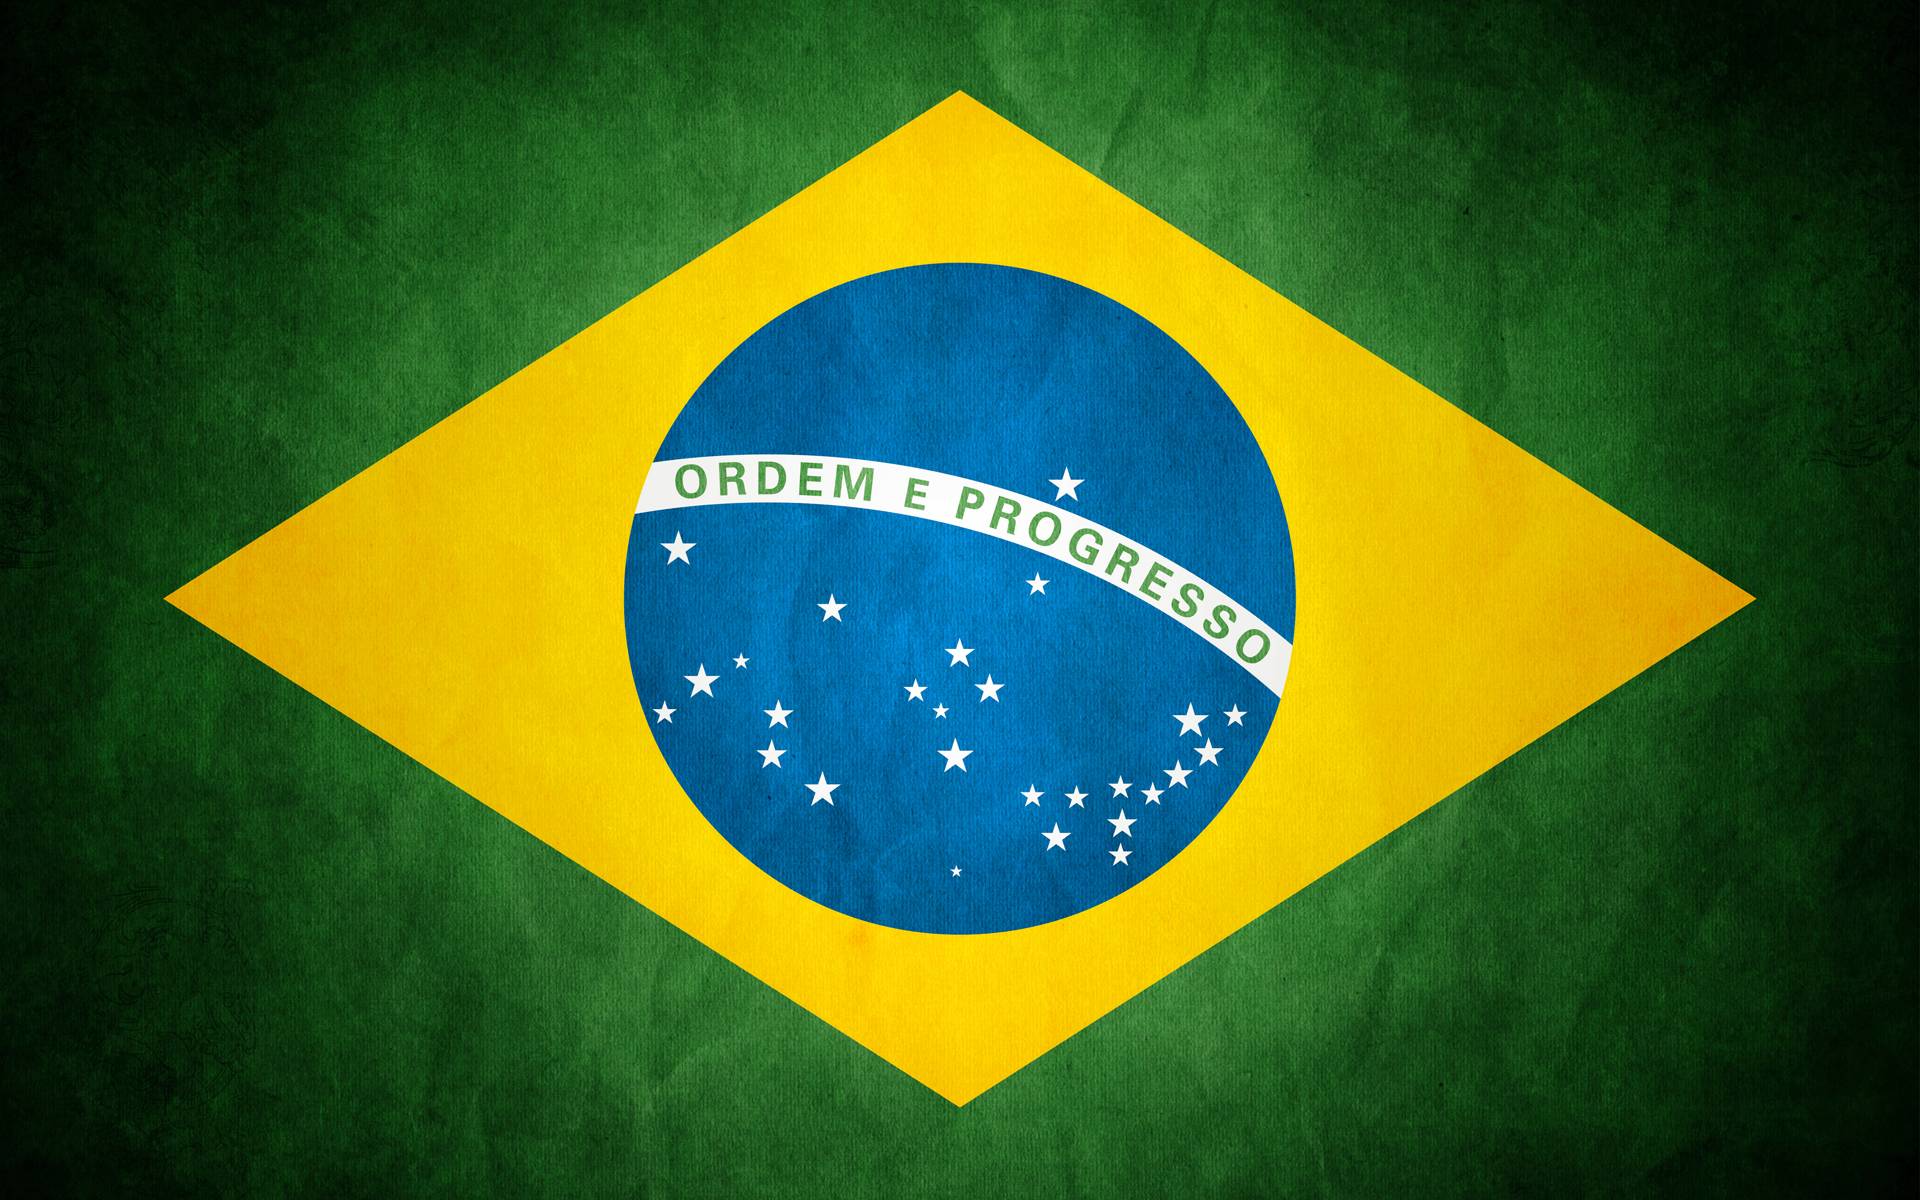 200 Free Brazil Flag  Brazil Images  Pixabay